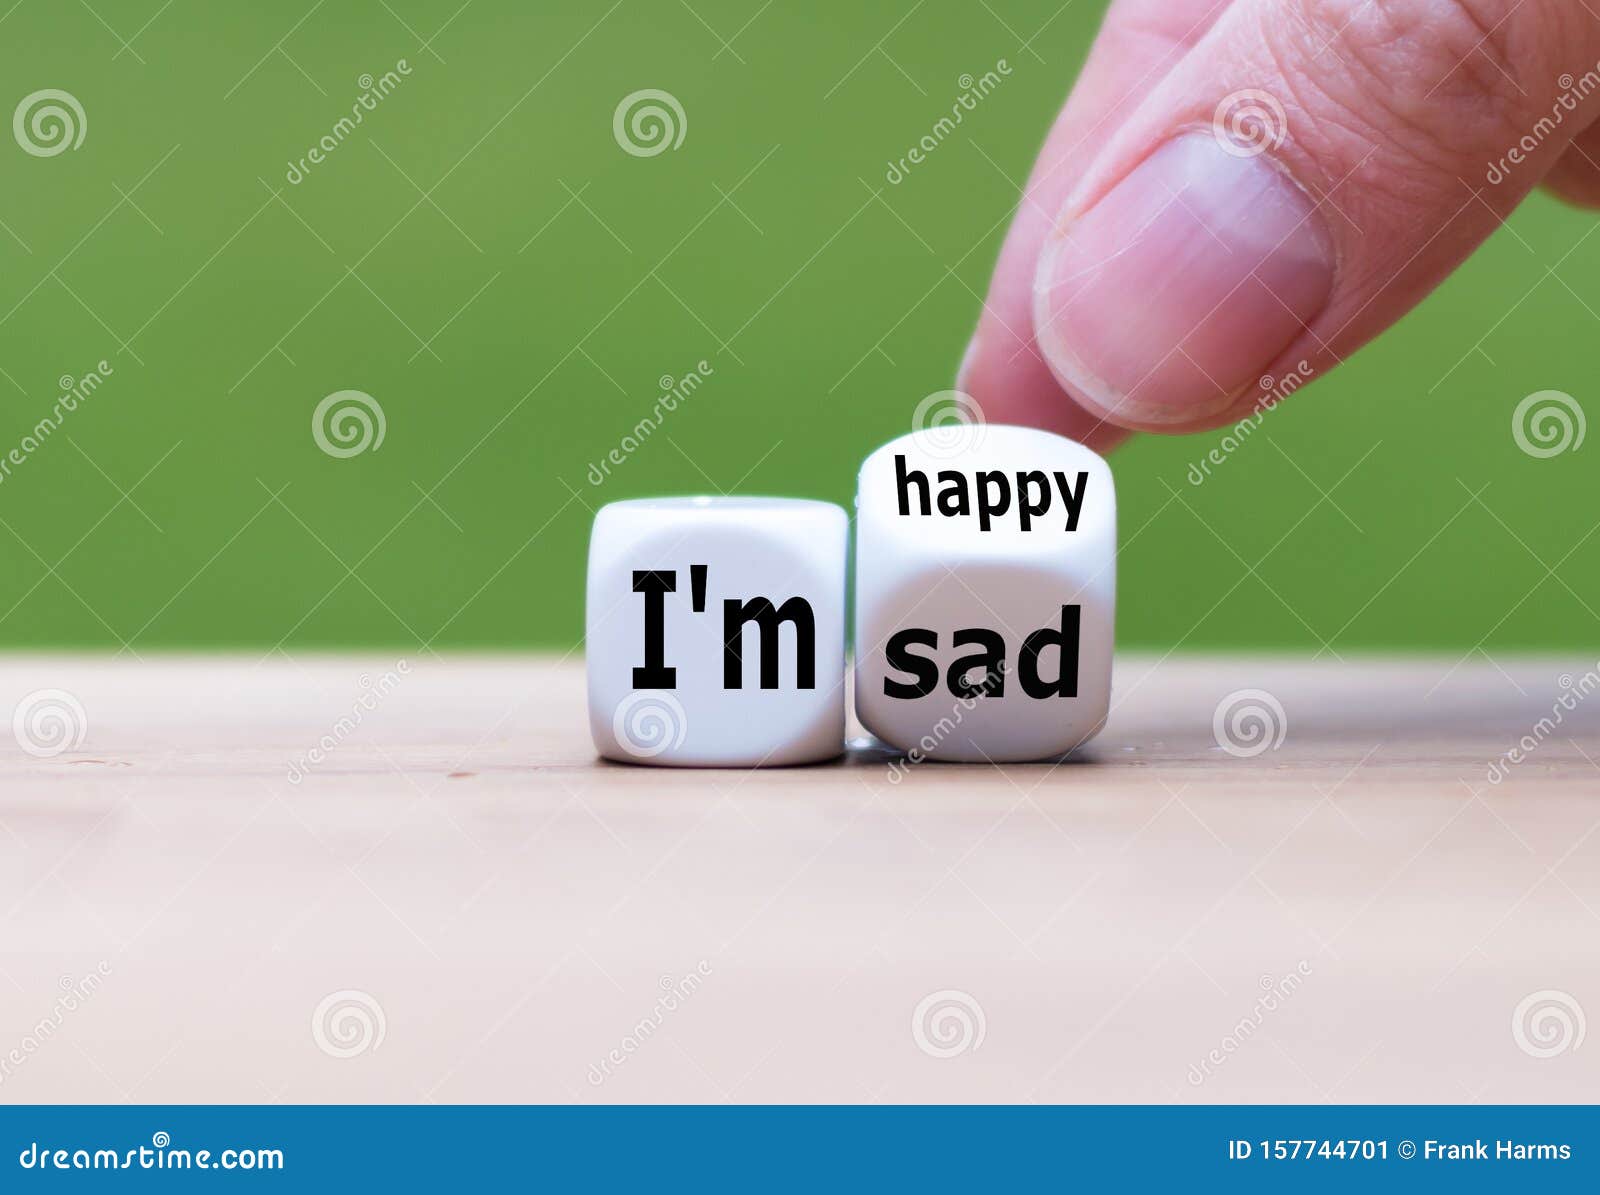 Happy Or Sad? Stock Image. Image Of Symbol, Idea, Cube - 157744701